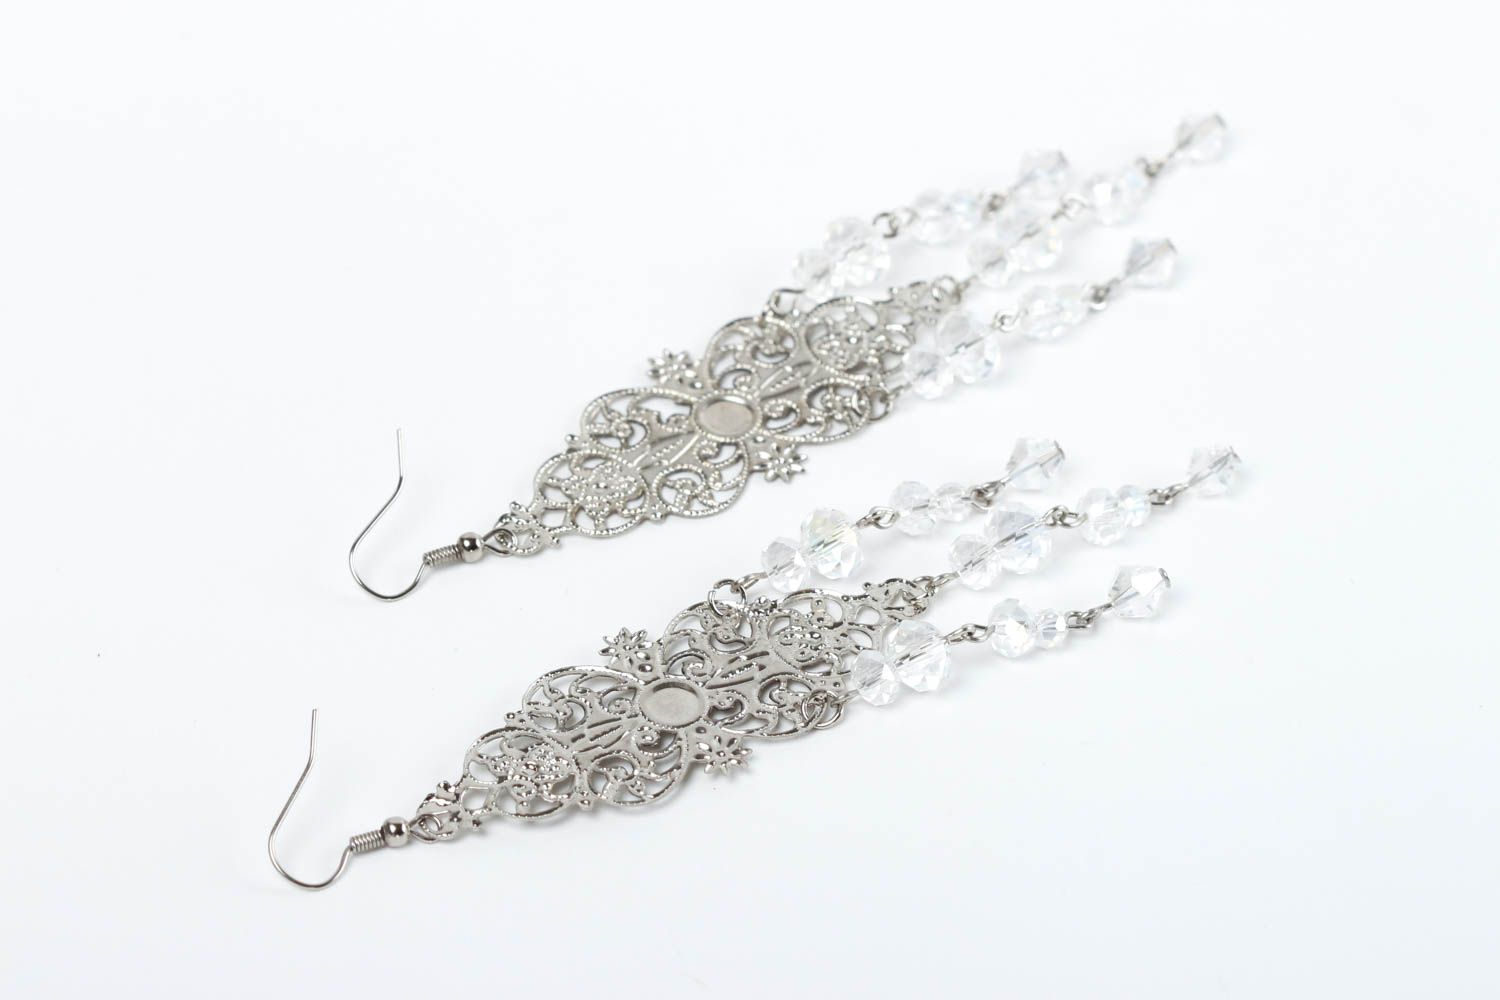 Handmade earrings designer earrings unusual gift crystal accessory gift for her photo 4